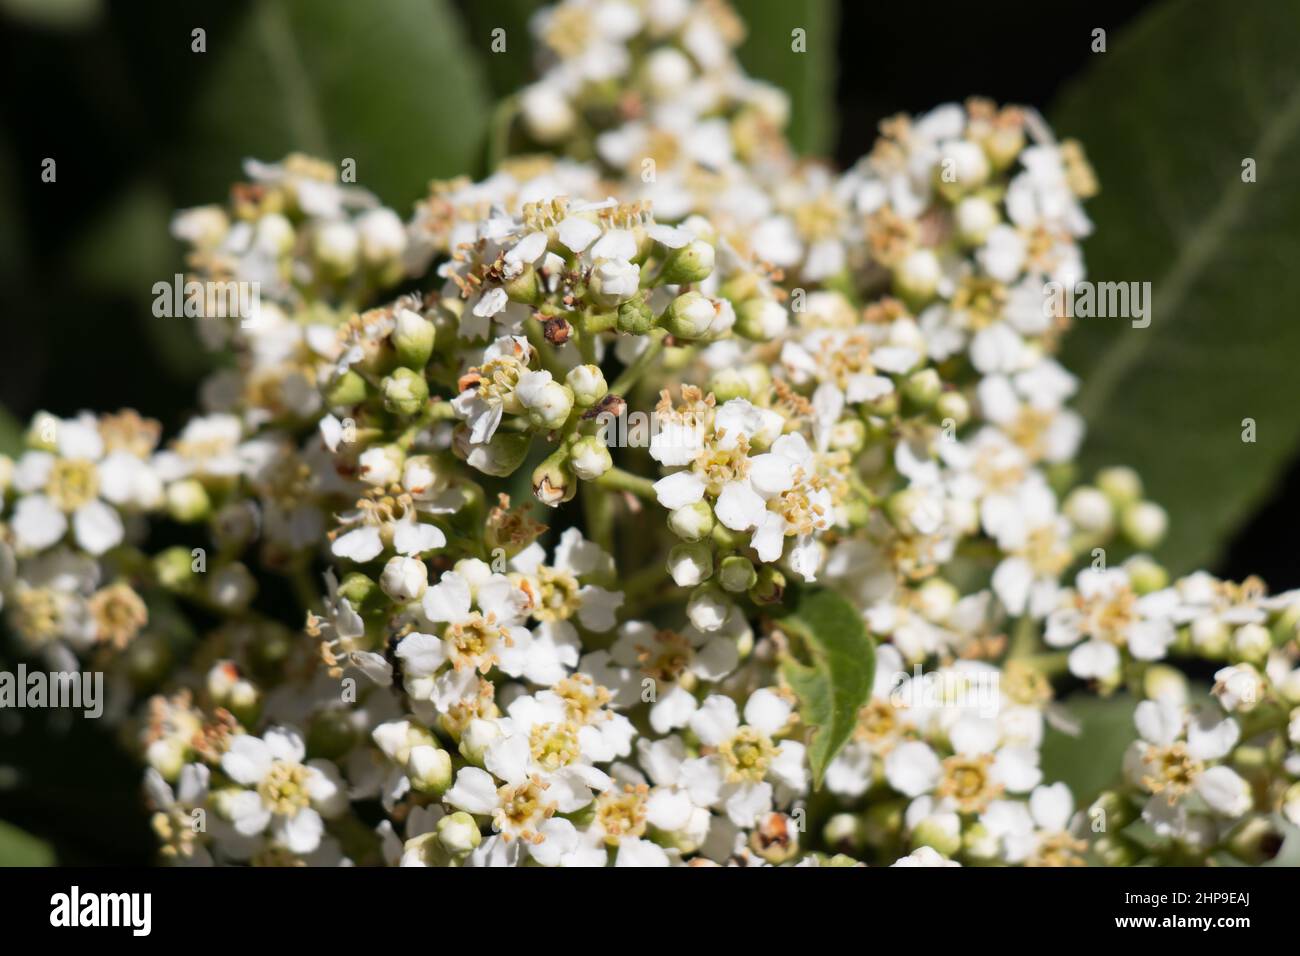 White flowering racemose panicle inflorescence of Heteromeles Arbutifolia, Rosaceae, native evergreen shrub in the San Gabriel Mountains, Summer. Stock Photo